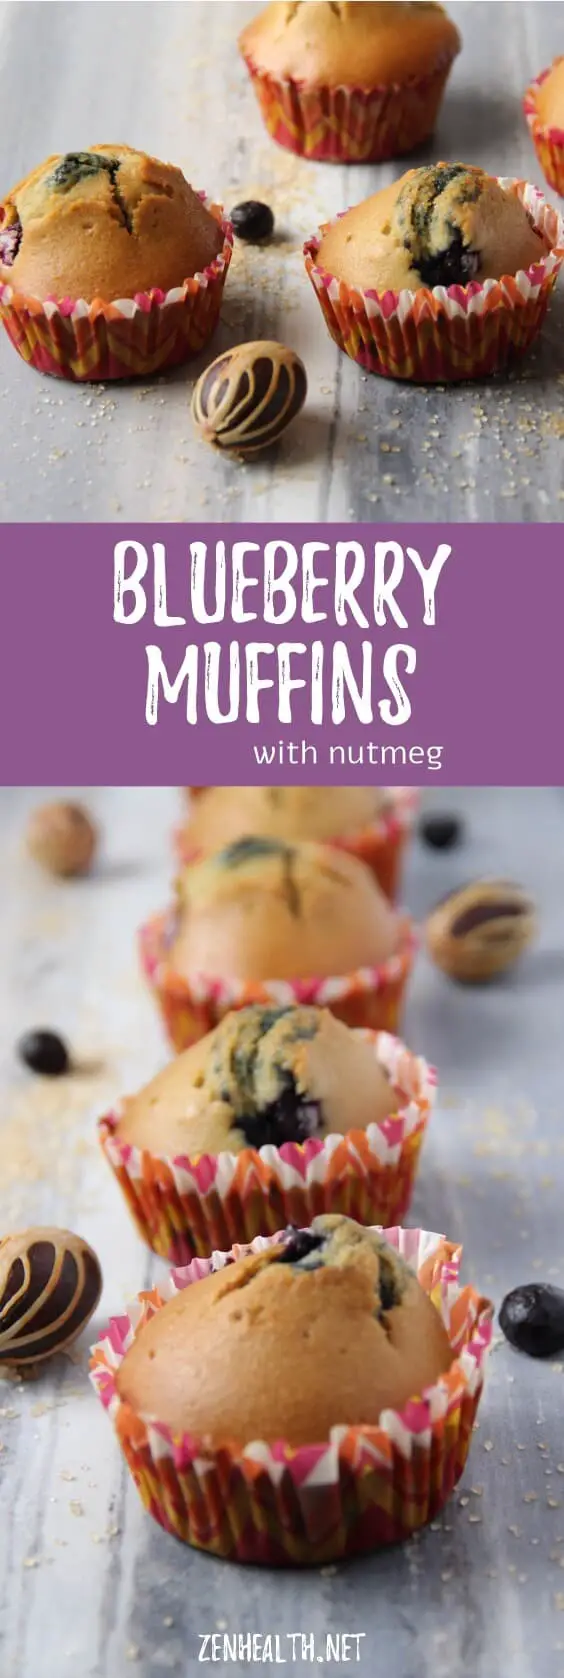 Blueberry muffin recipe with nutmeg #muffinrecipes #nutmeg #blueberrymuffins #blueberrymuffinrecipe #recipeideas #breakfastmuffins 